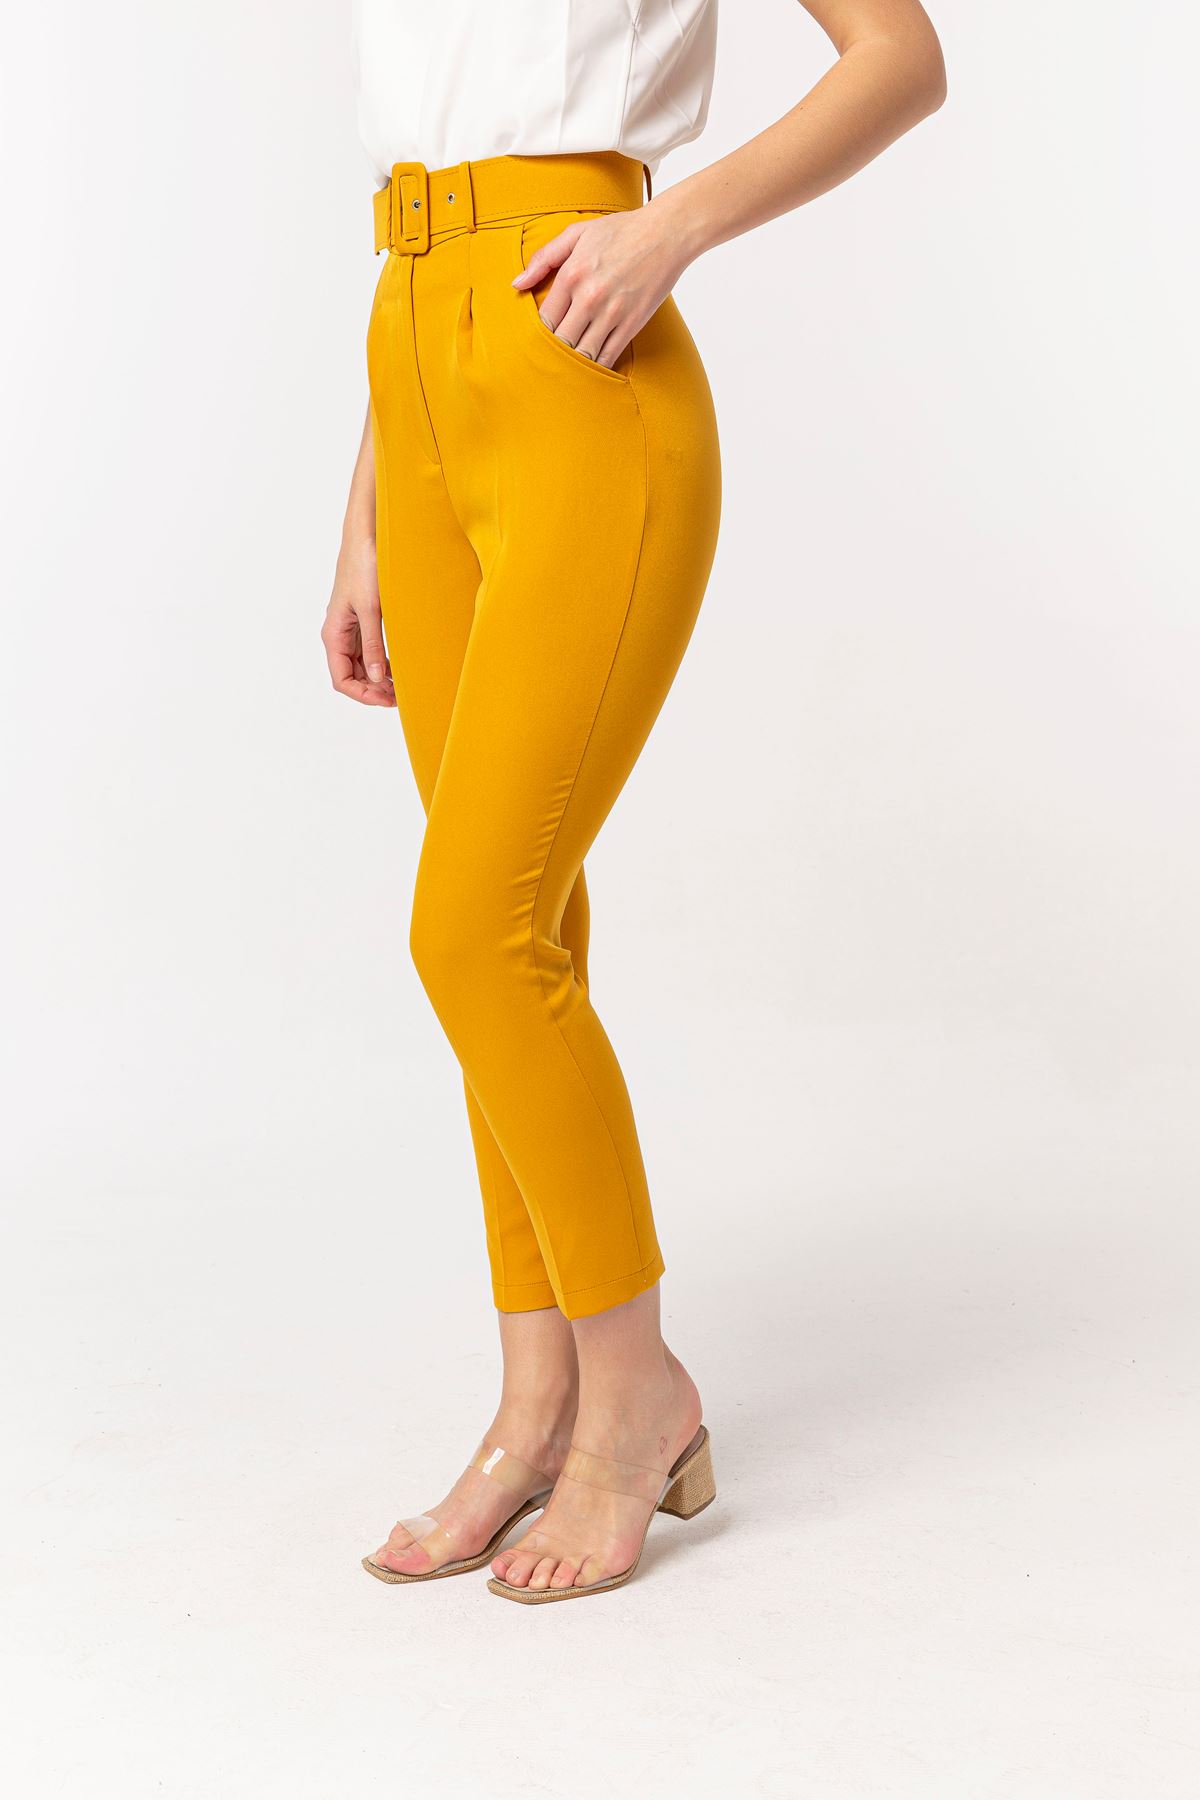 Atlas Fabric Ankle Length Women'S Trouser With Belt - Mustard